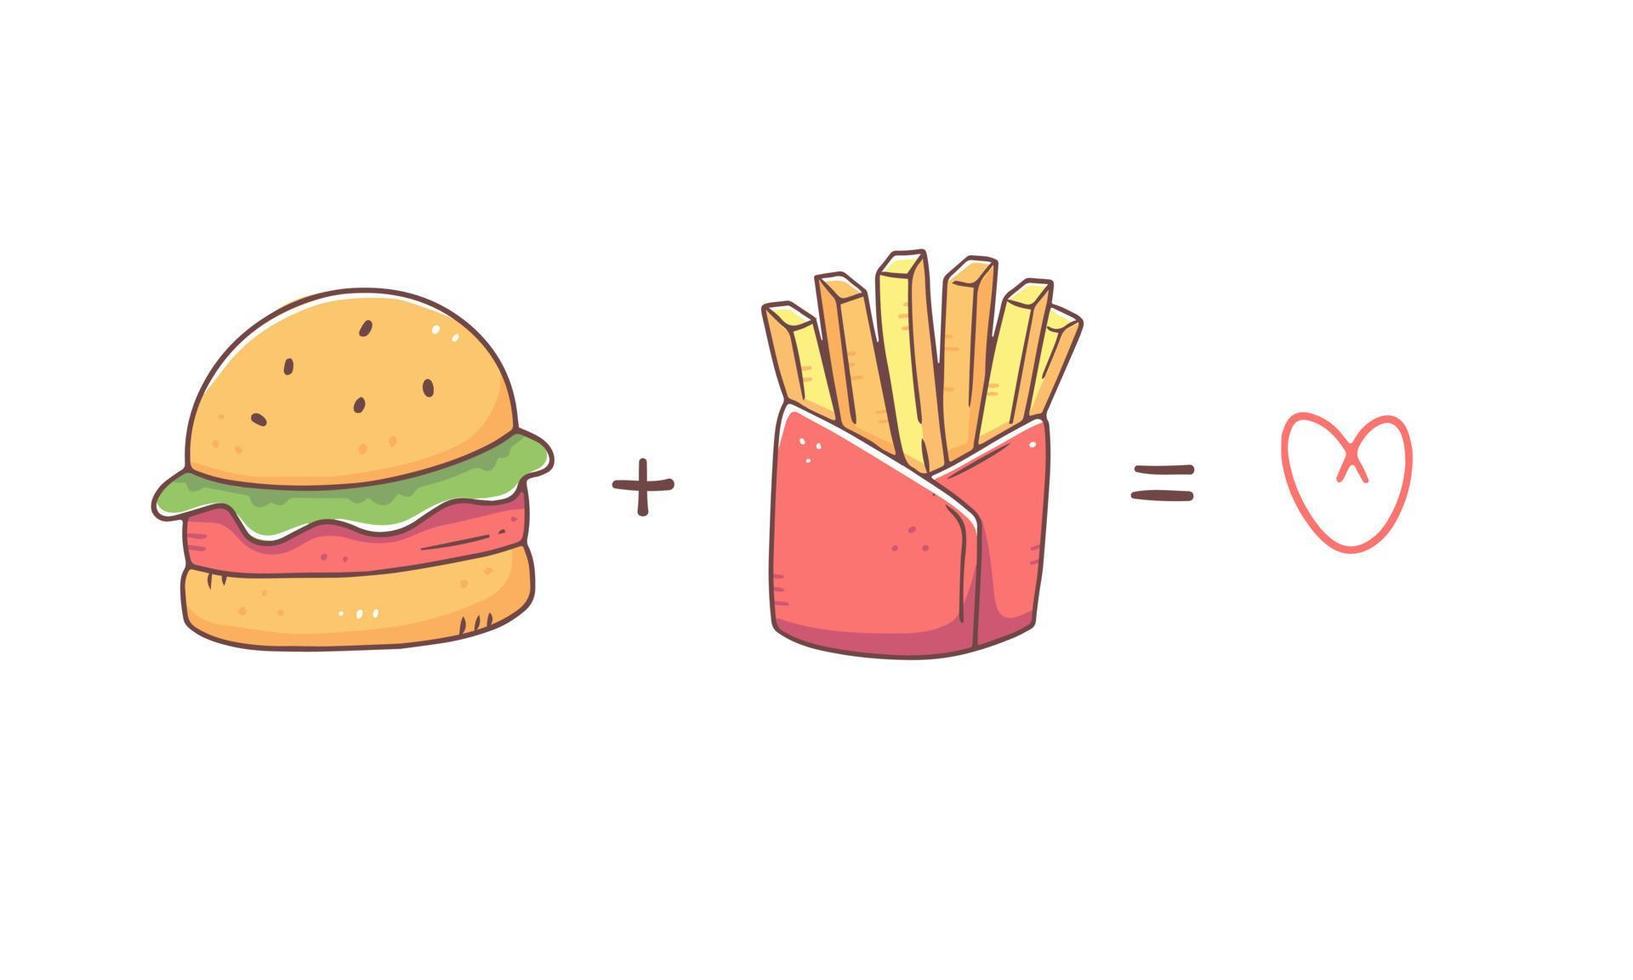 Burger plus fries equals love. Fast food poster. Vector food illustration.